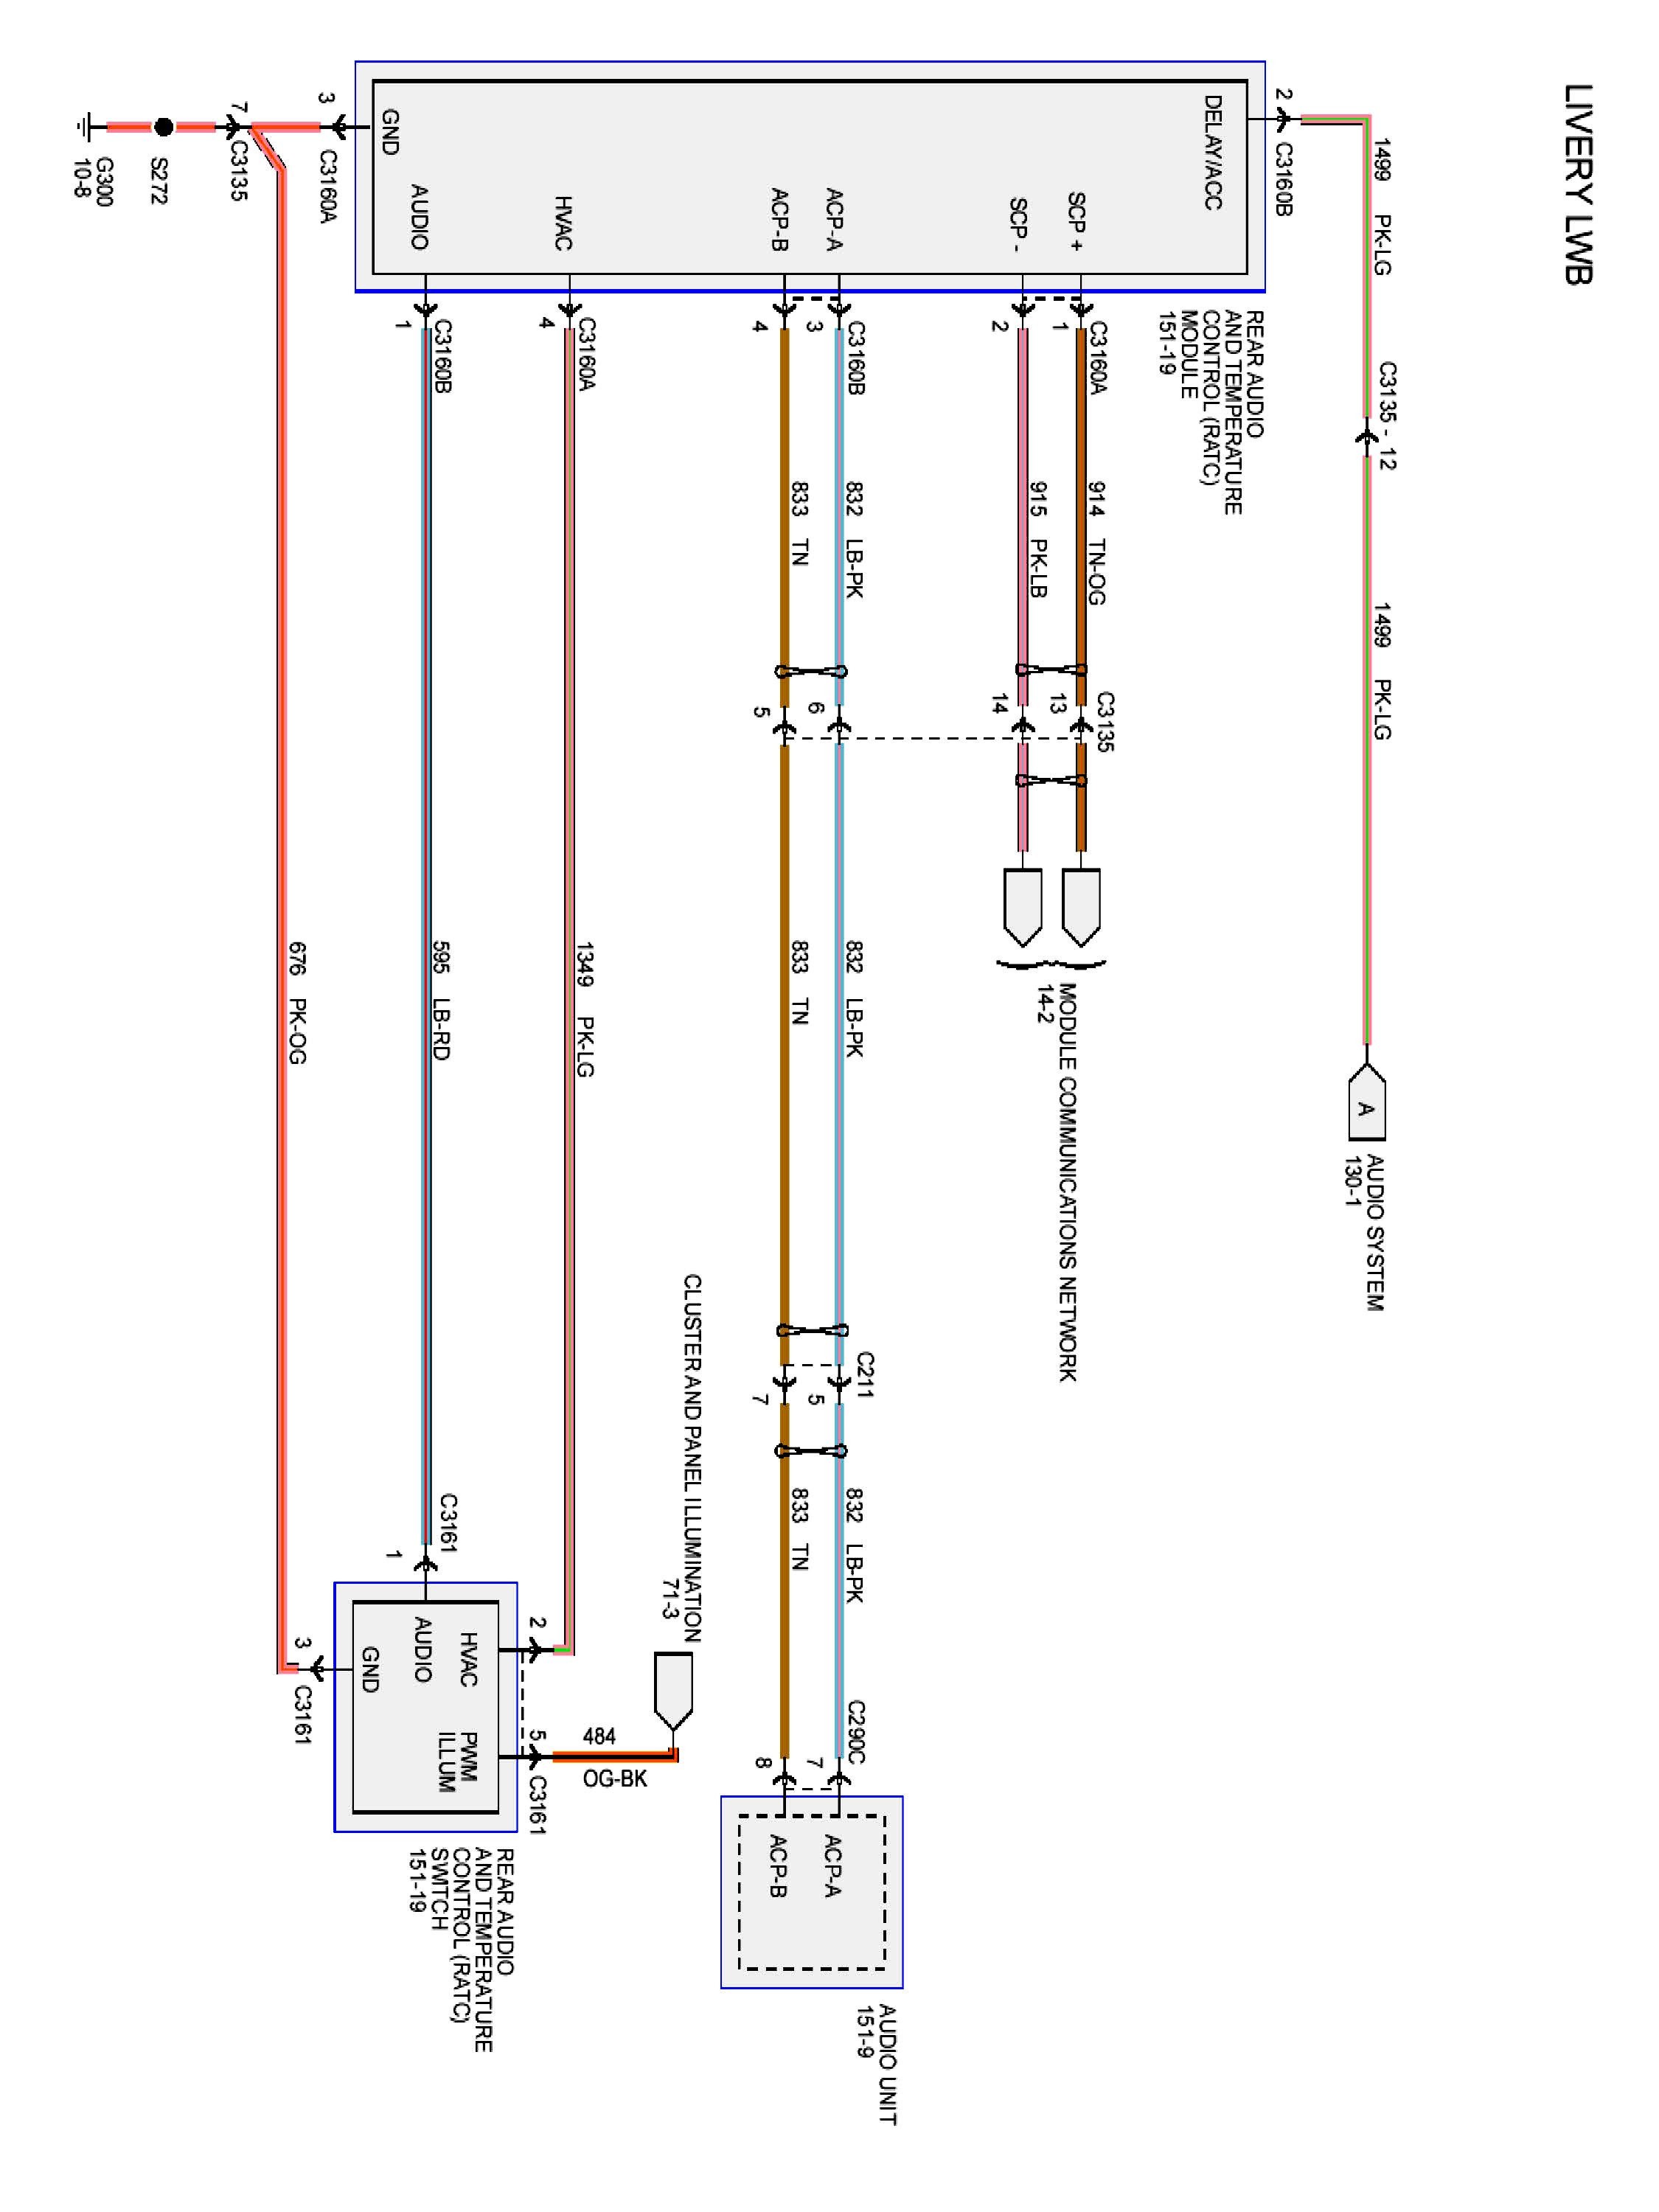 1996 lincoln town car wiring diagram - Wiring Diagram